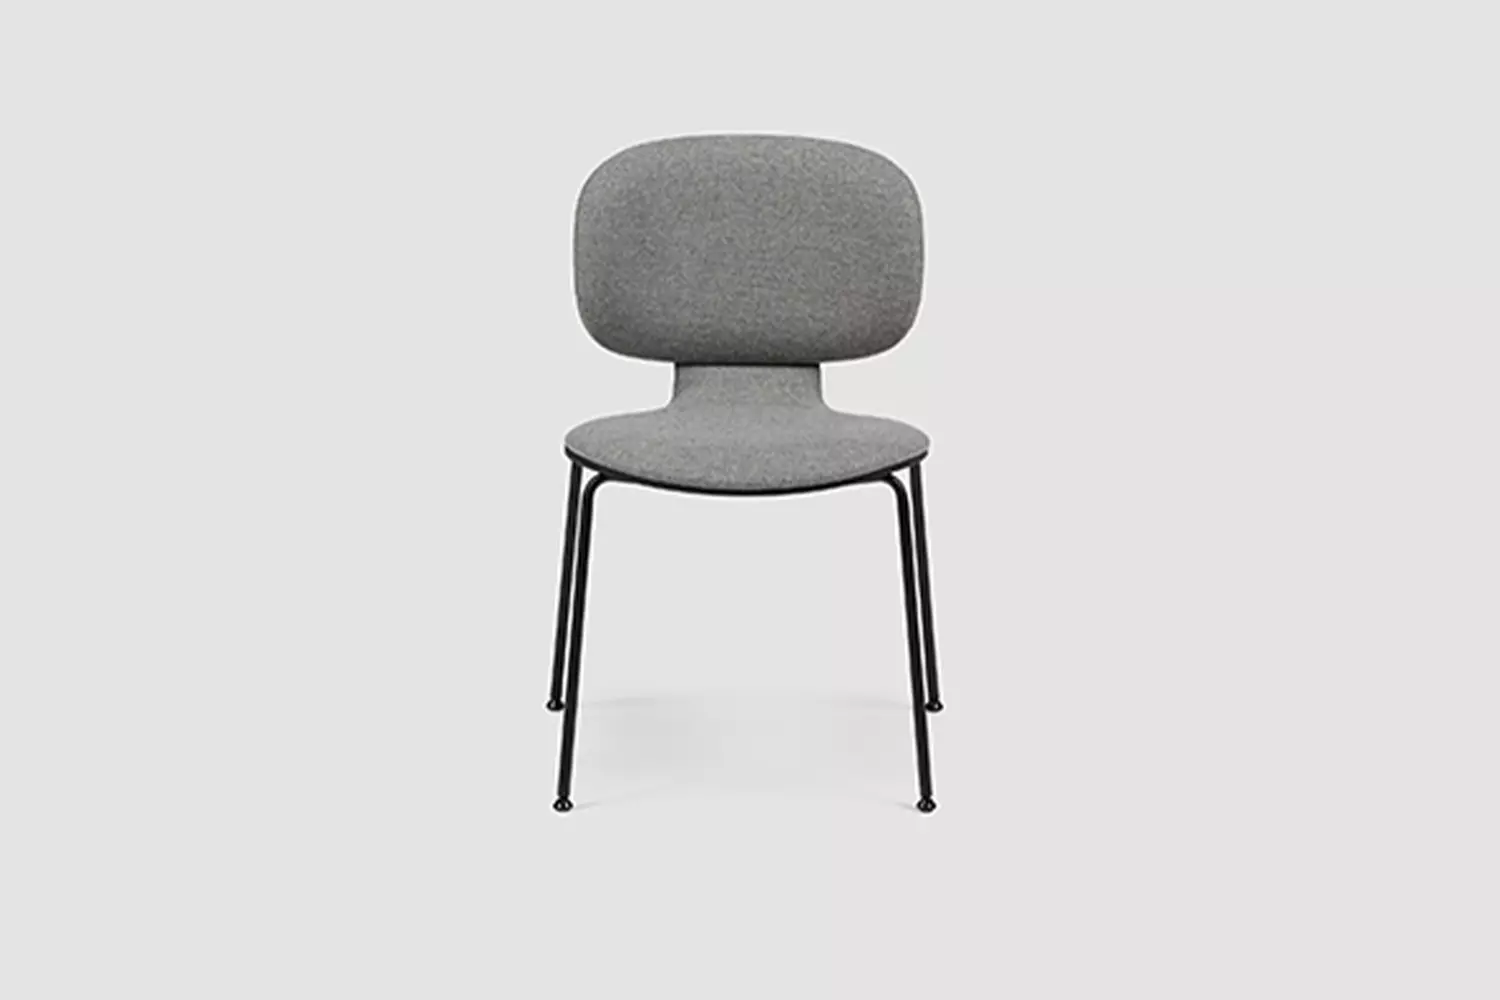 studio-chair-4-fuss, Fußkreuz gepolstert ungepolstert Premium stapelbar  Stuhl, Bene Büromöbel, Bild 5